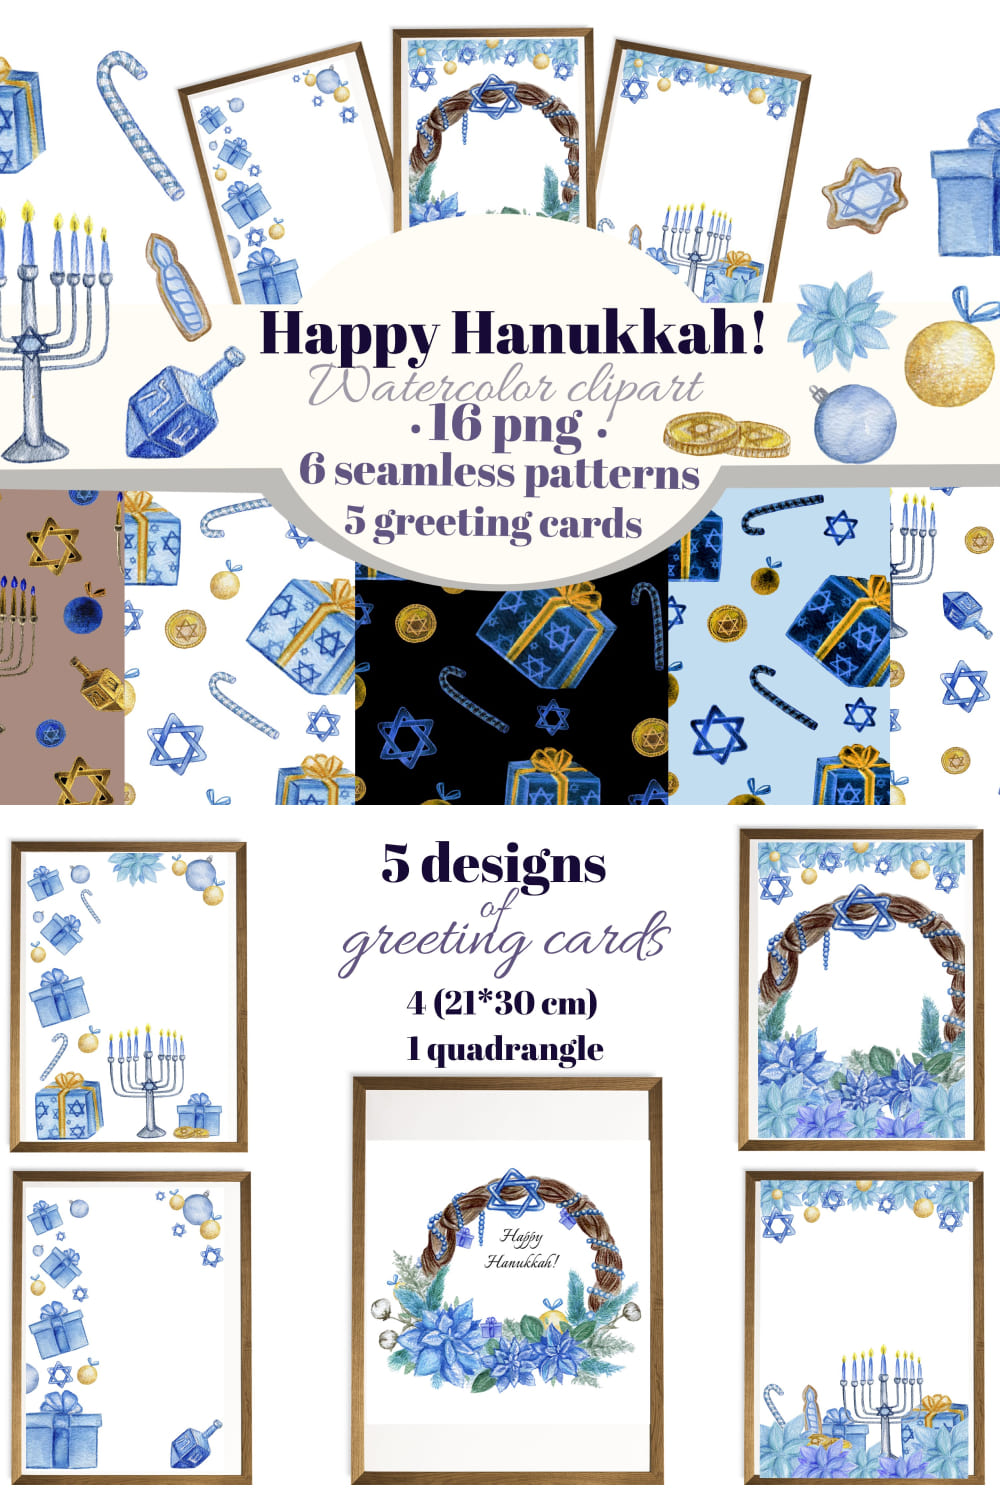 Hanukkah watercolor clipart of pinterest.